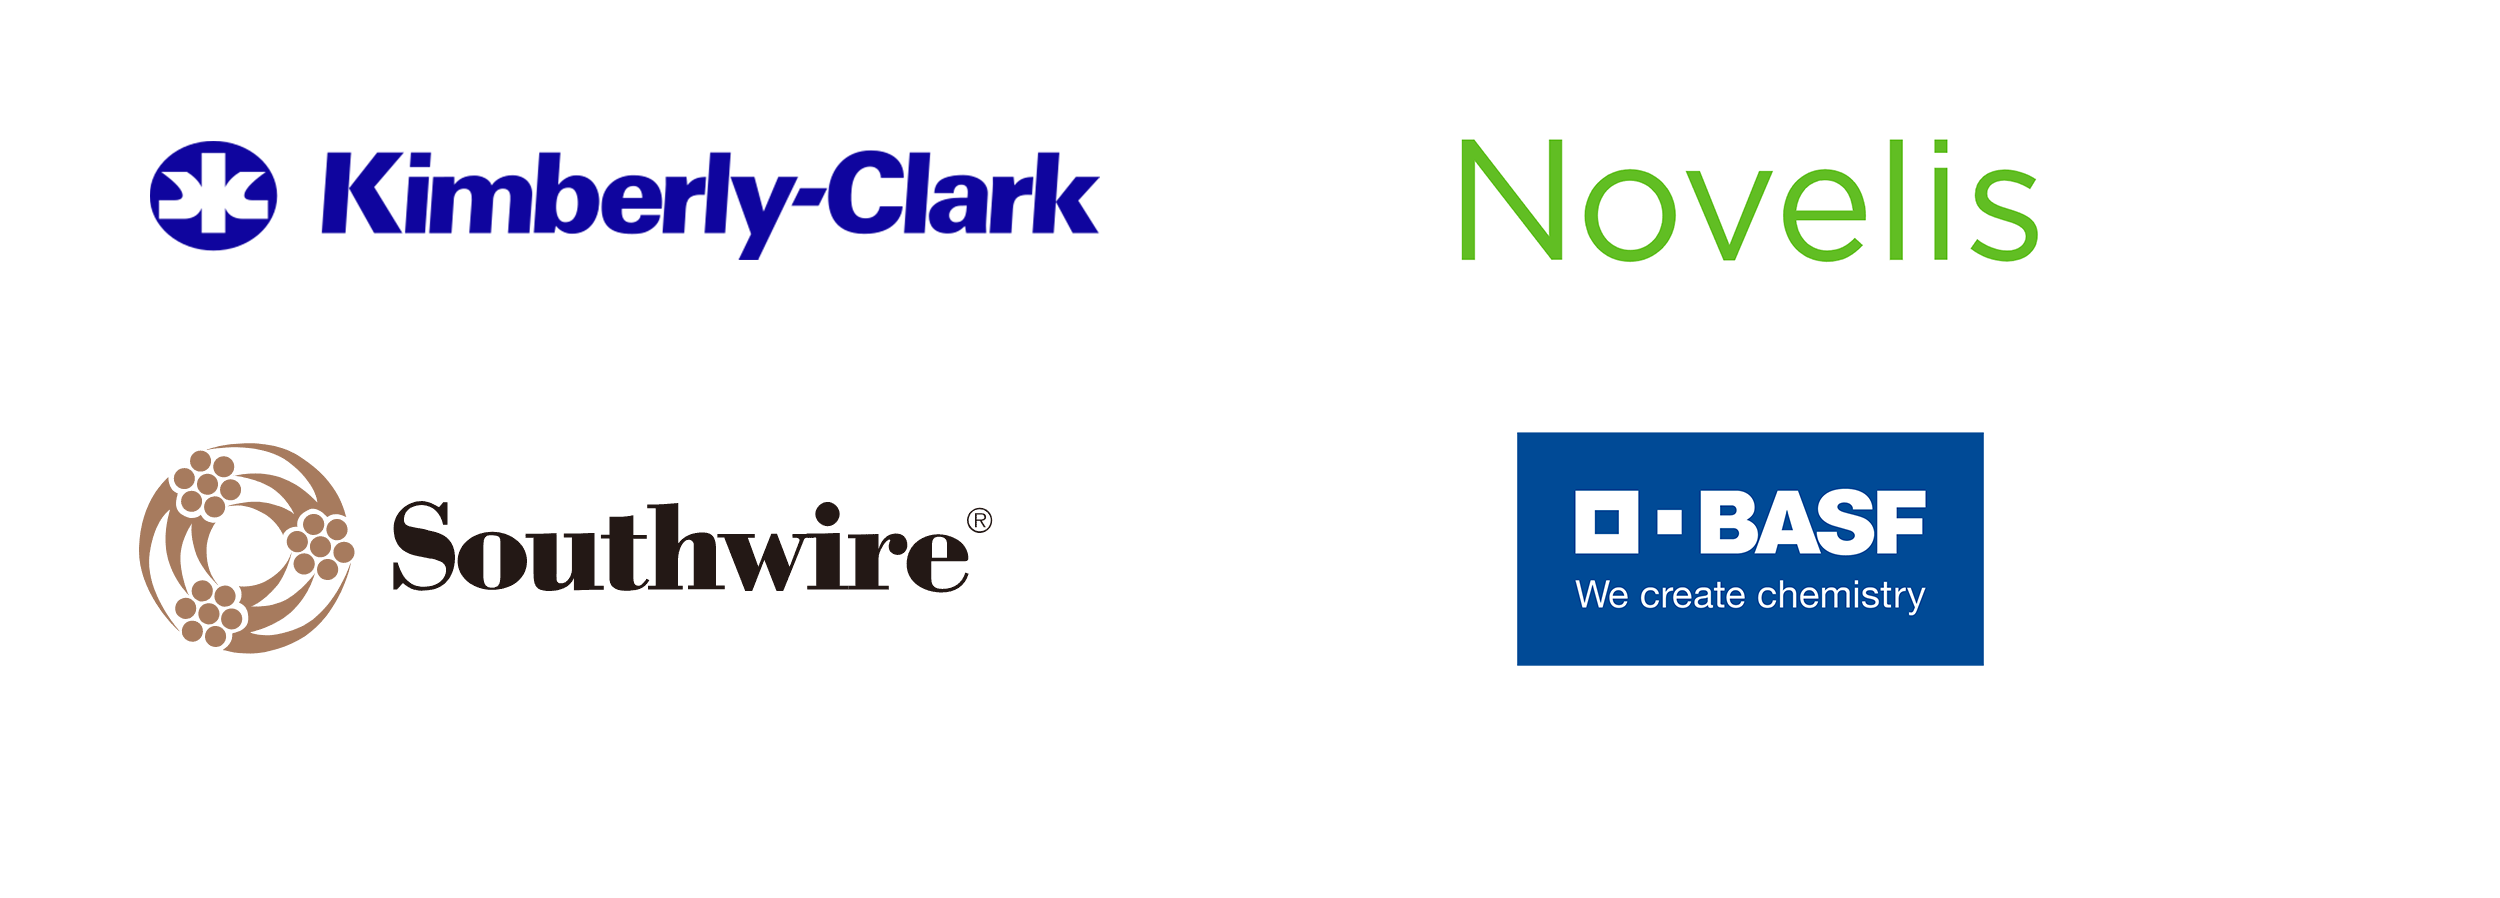 logos for Kimberly Clark, Southwire, BASF, and Novelis